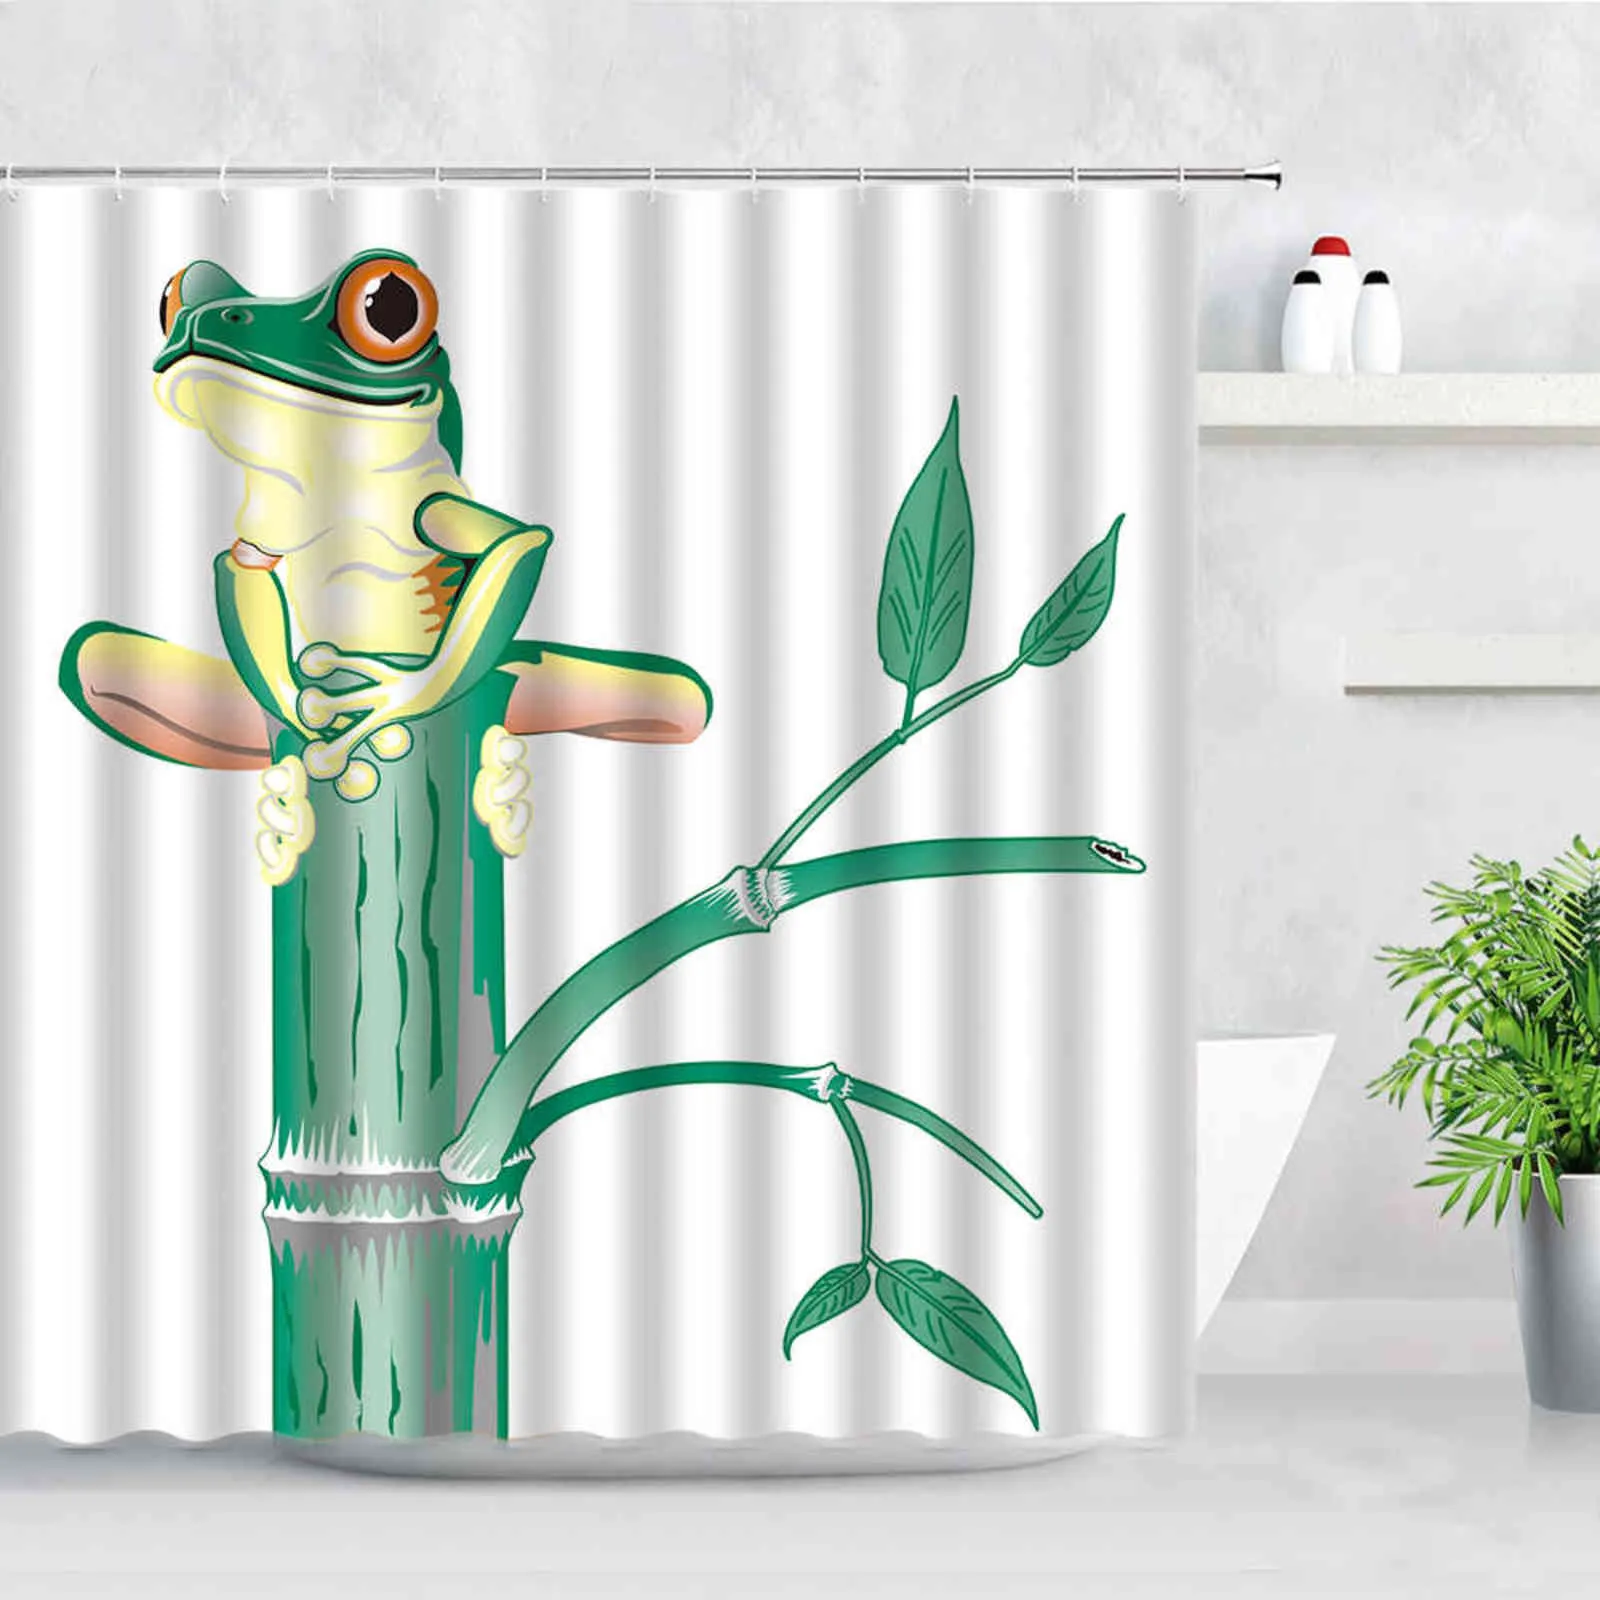 Funny Frog Cartoon Shower Curtain Sets Leaf Animal Creative Children  Bathroom Decor Waterproof Fabric Home Hooks Bath Curtains 211116 From  Kong09, $10.97